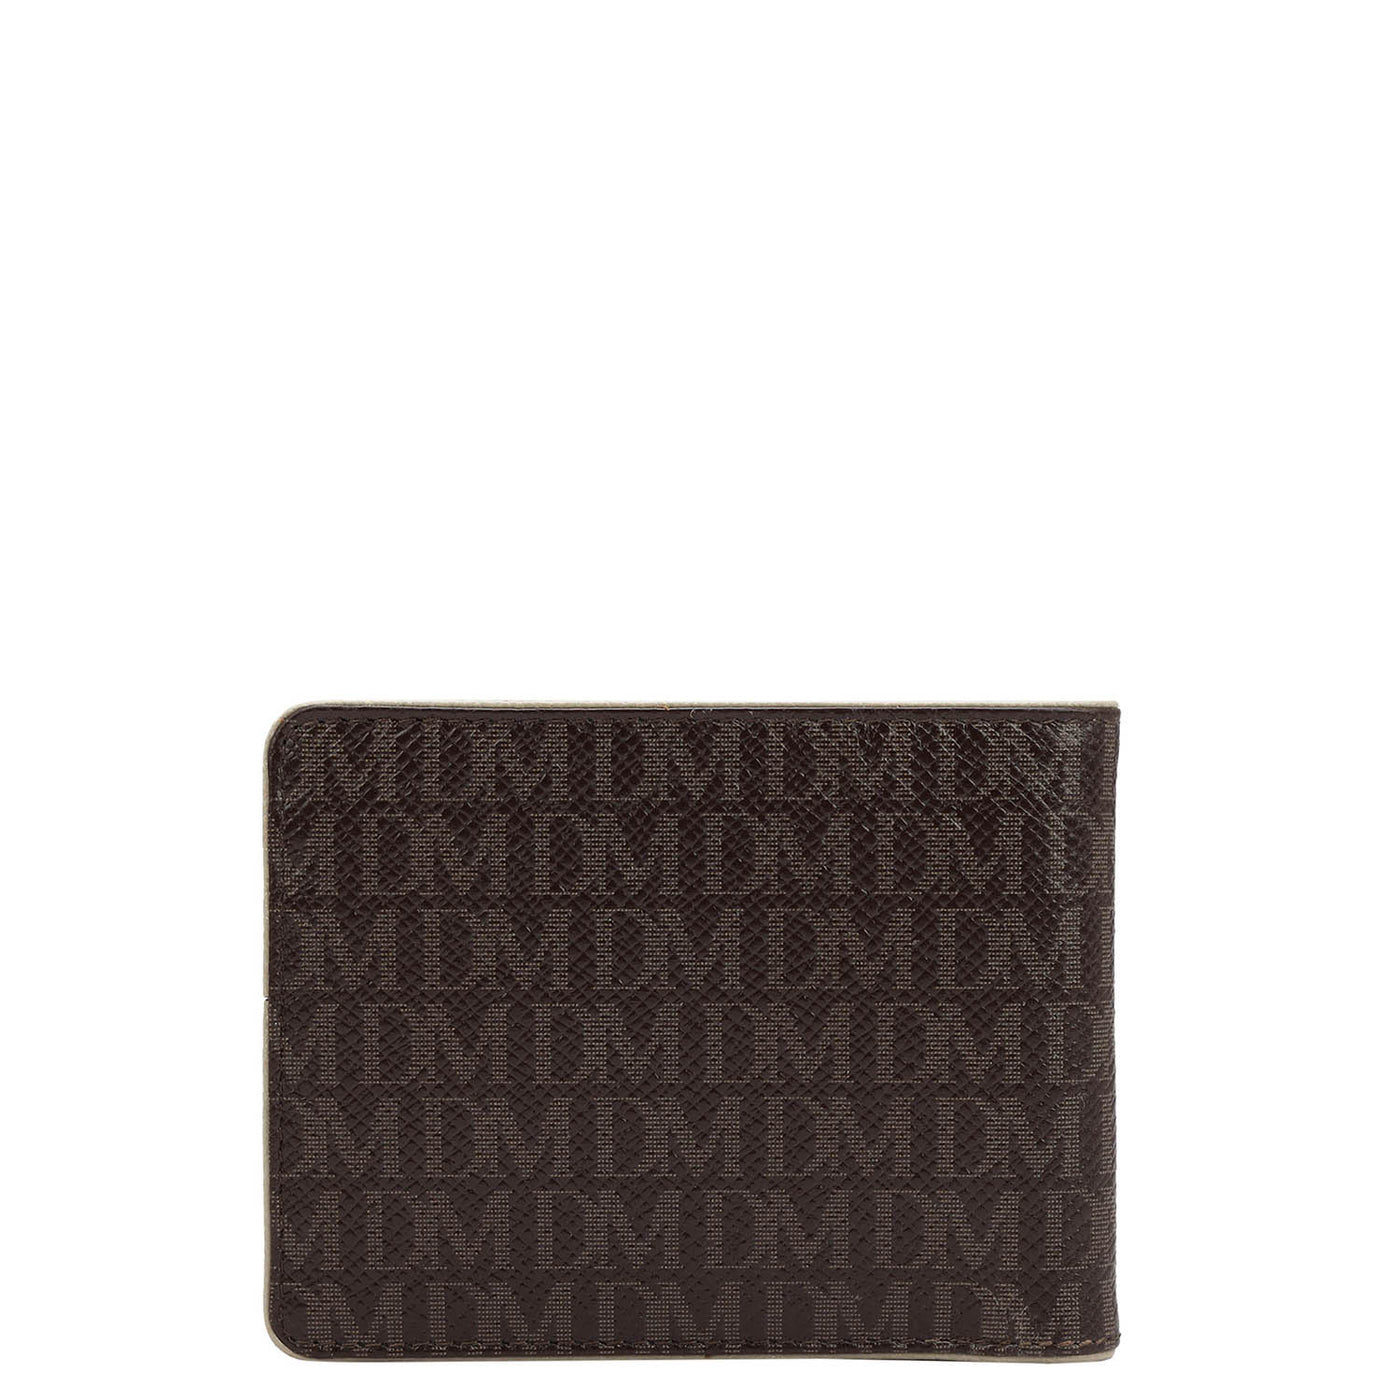 Monogram Leather Mens Wallet - Chocolate